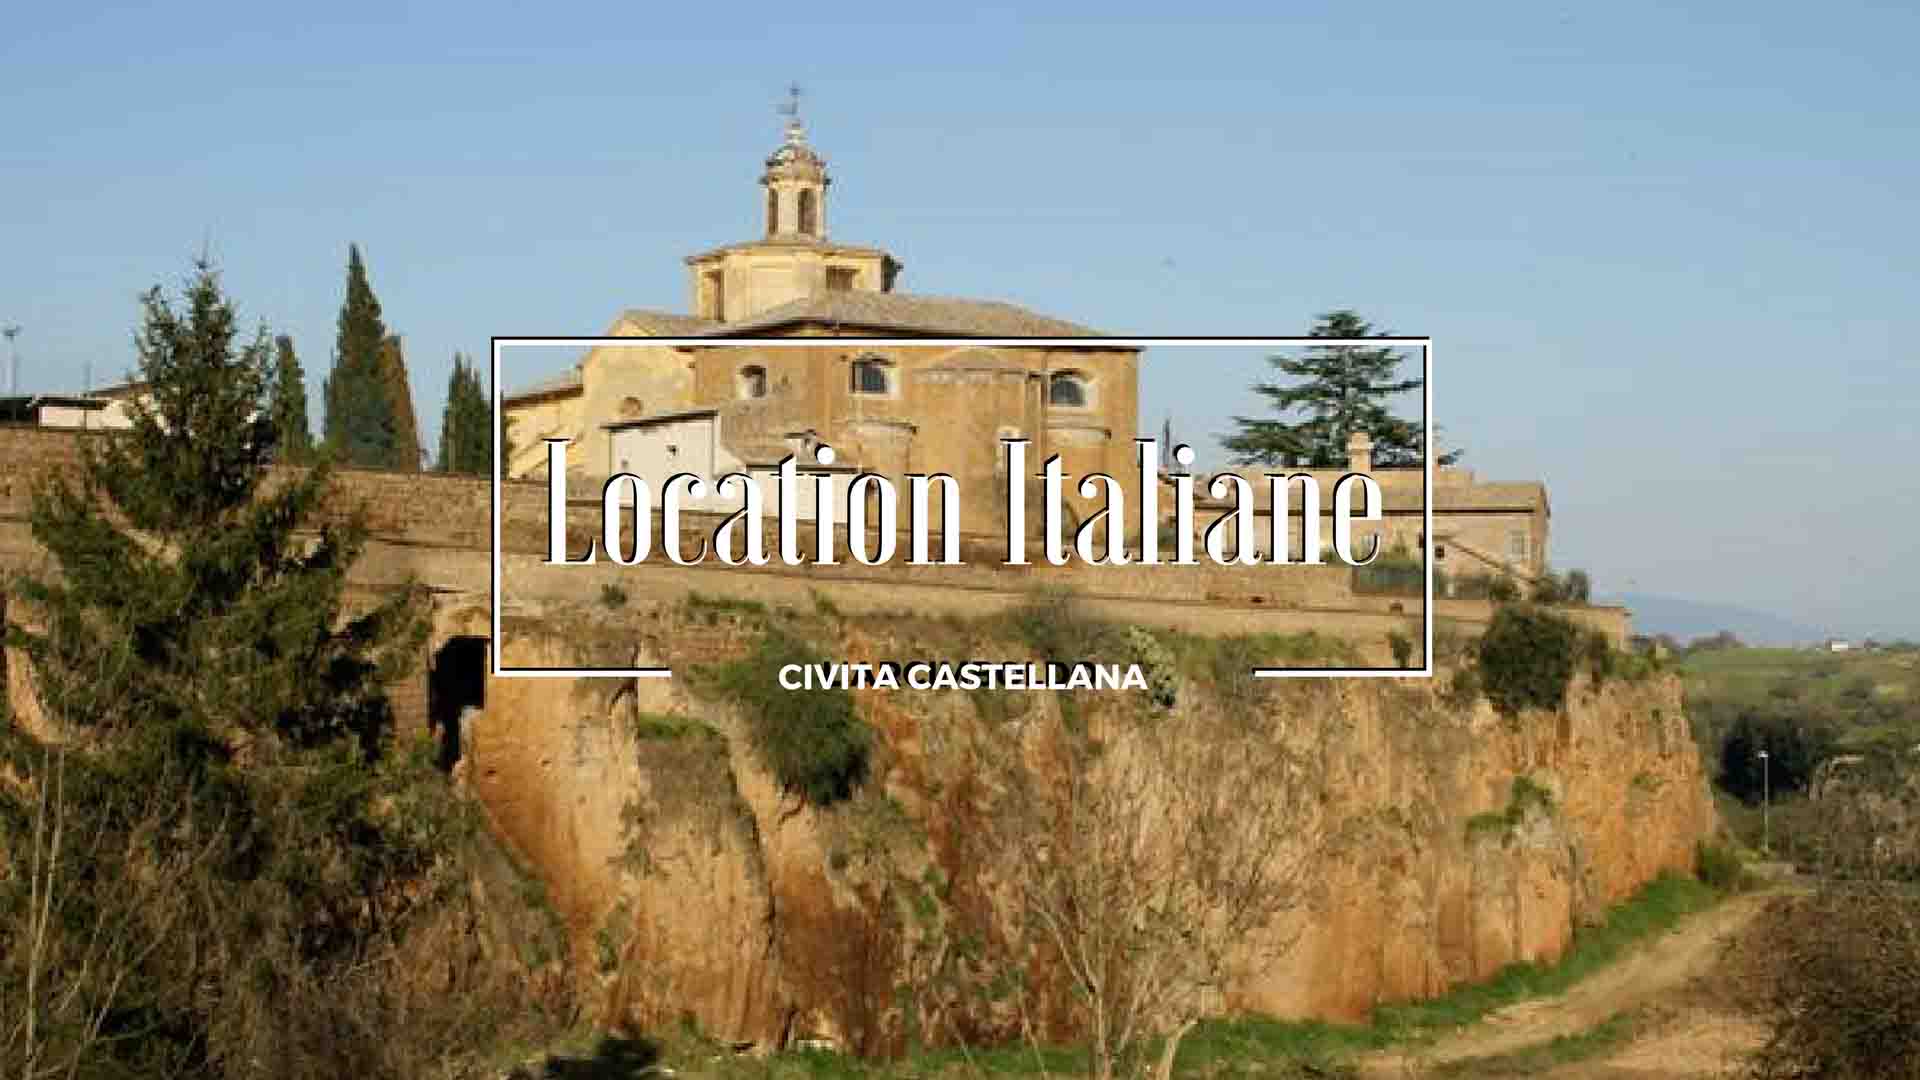 Civita Castellana